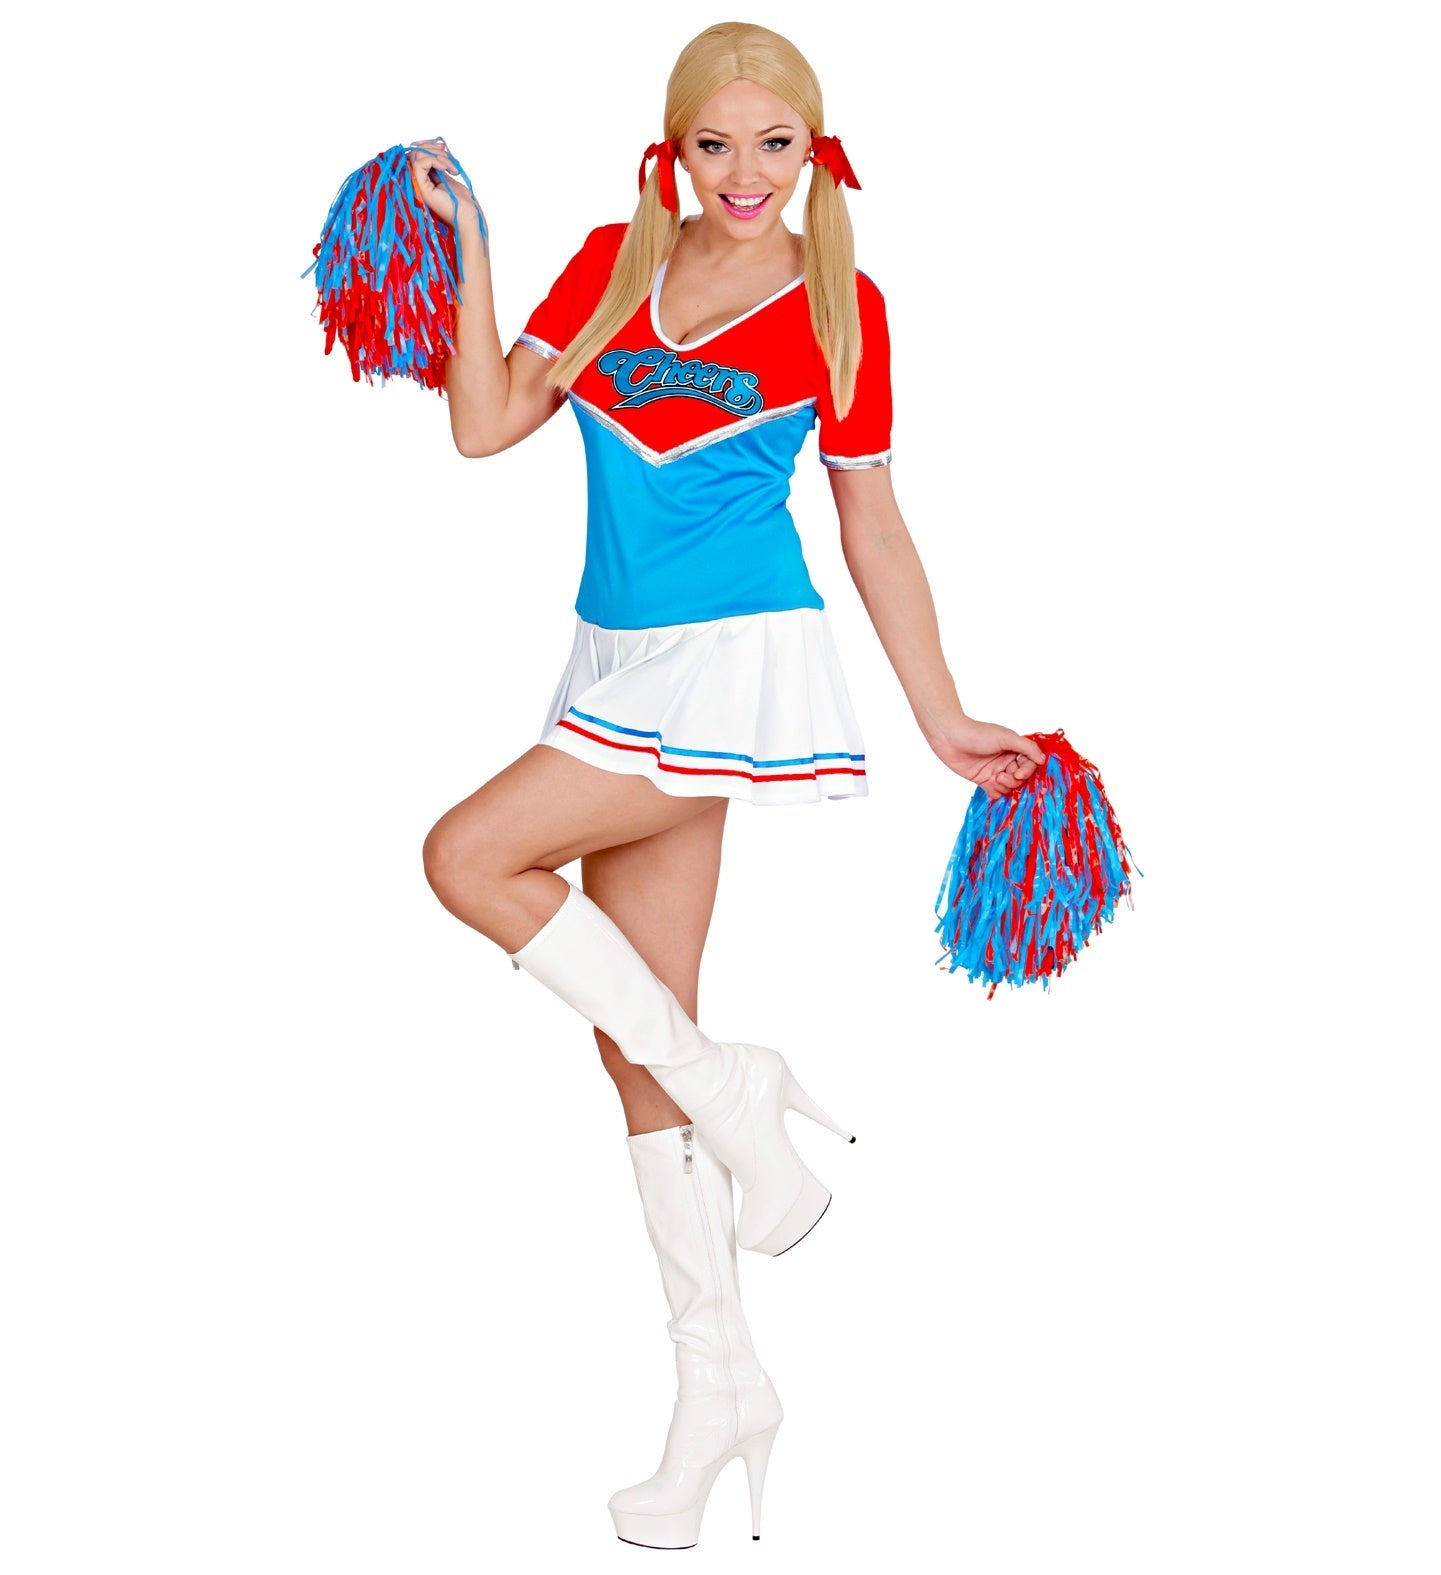 Cheerleader jurk rood blauw